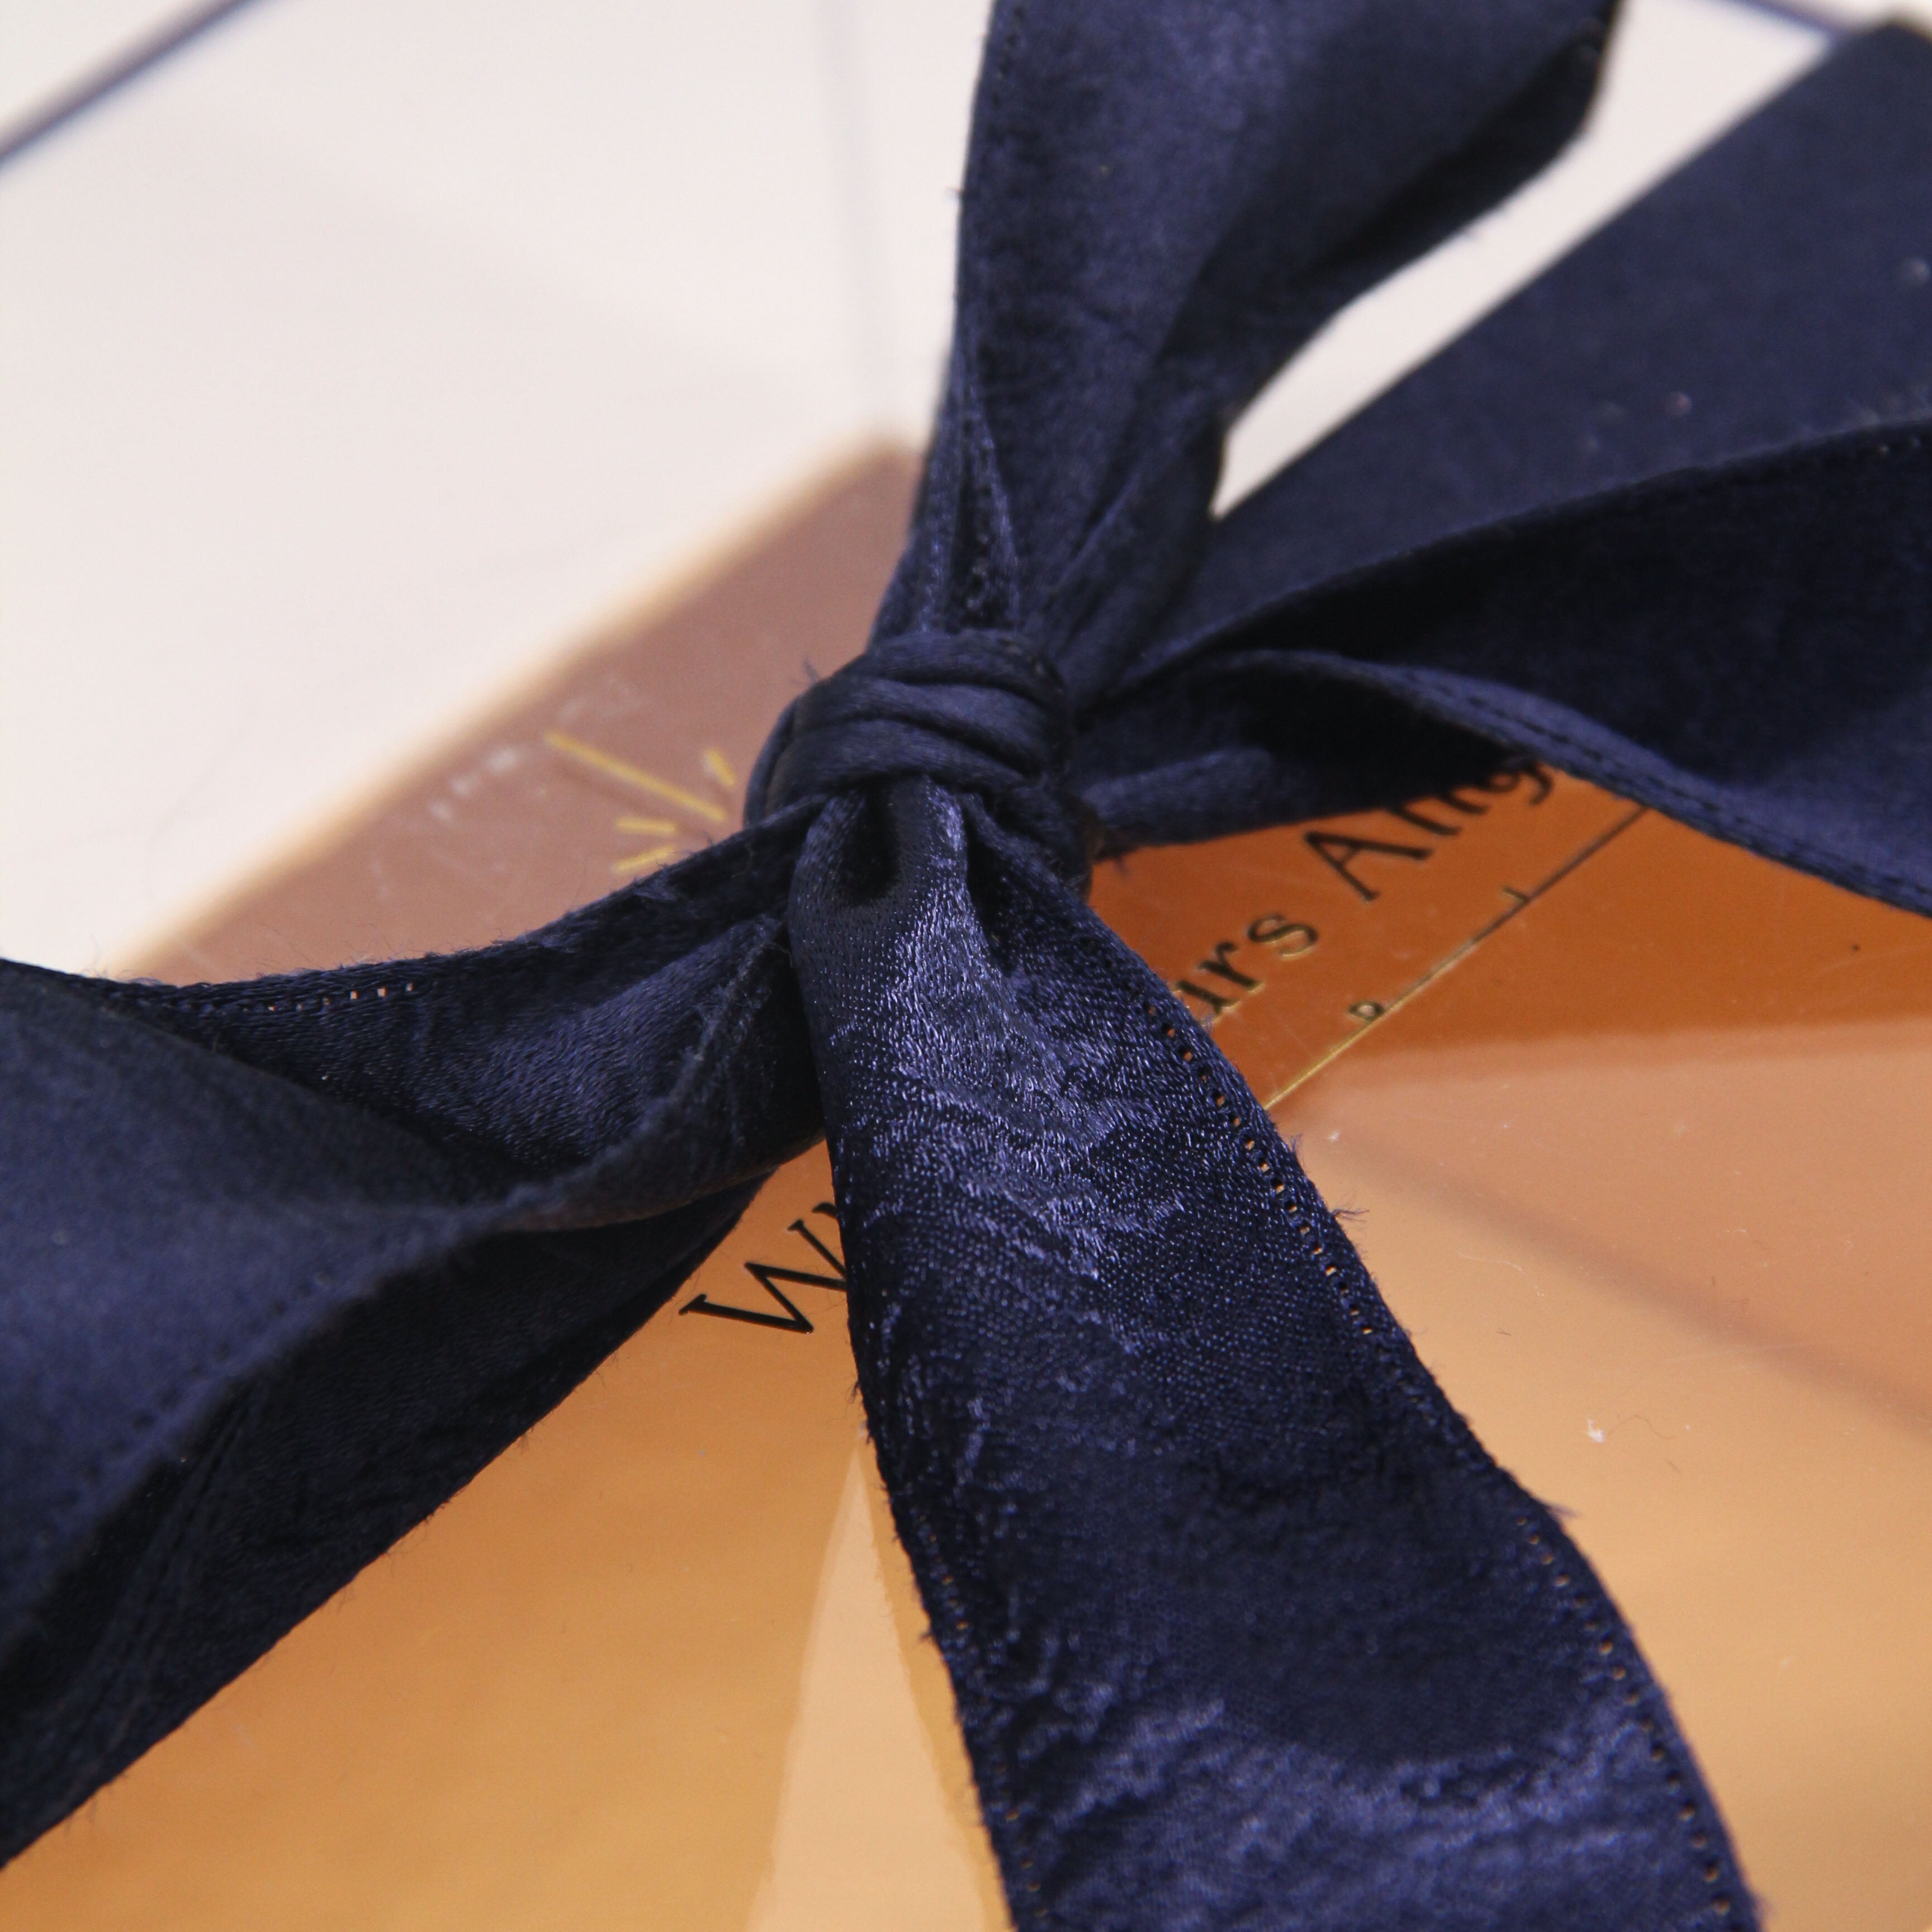 Luxury Gift Box w/ Drawer (Navy Blue)